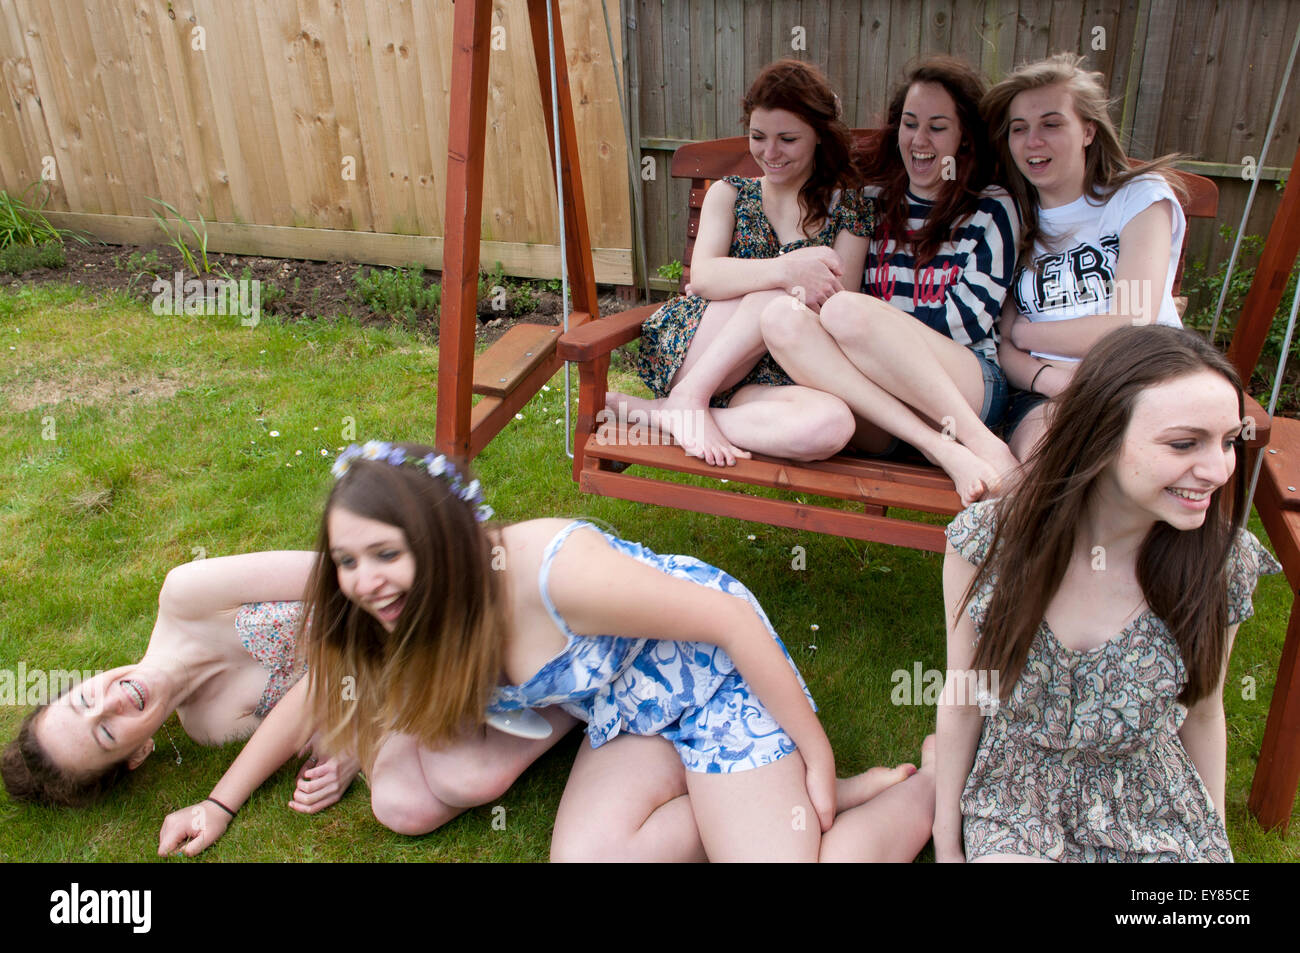 Happy group of teenage girls Stock Photo